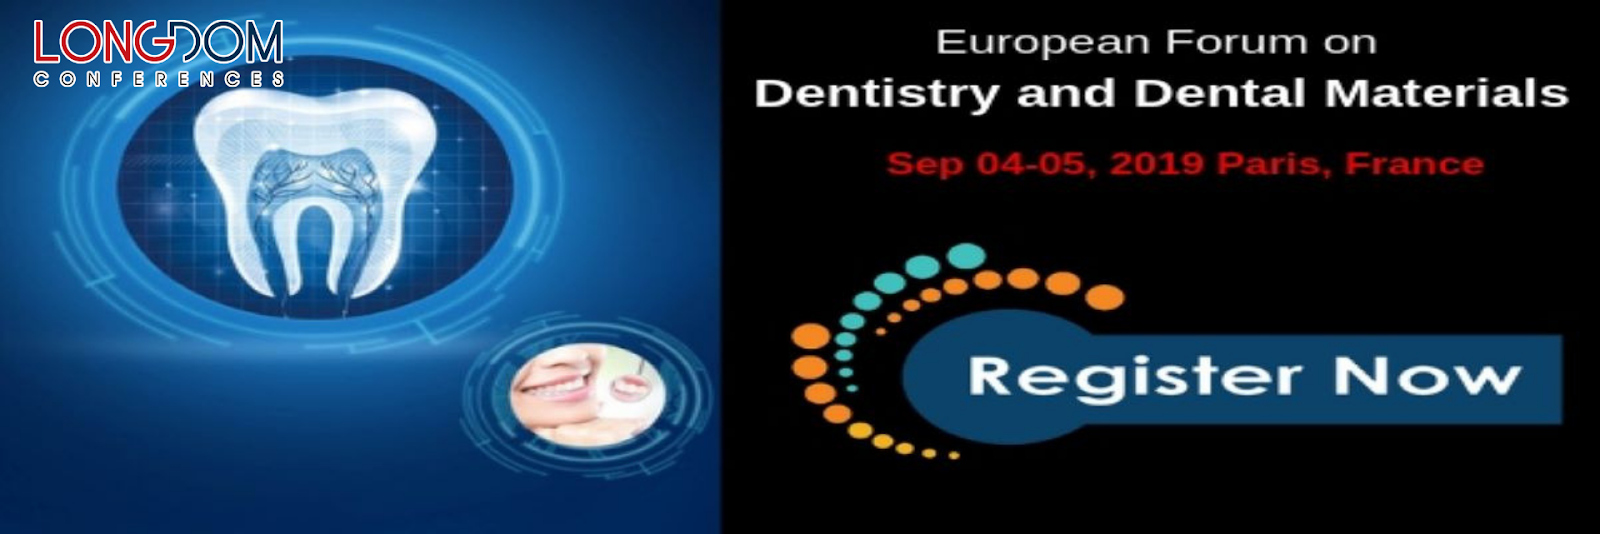 European summit on Dentistry and Dental Materials Sep 04-05, 2019 Paris, France